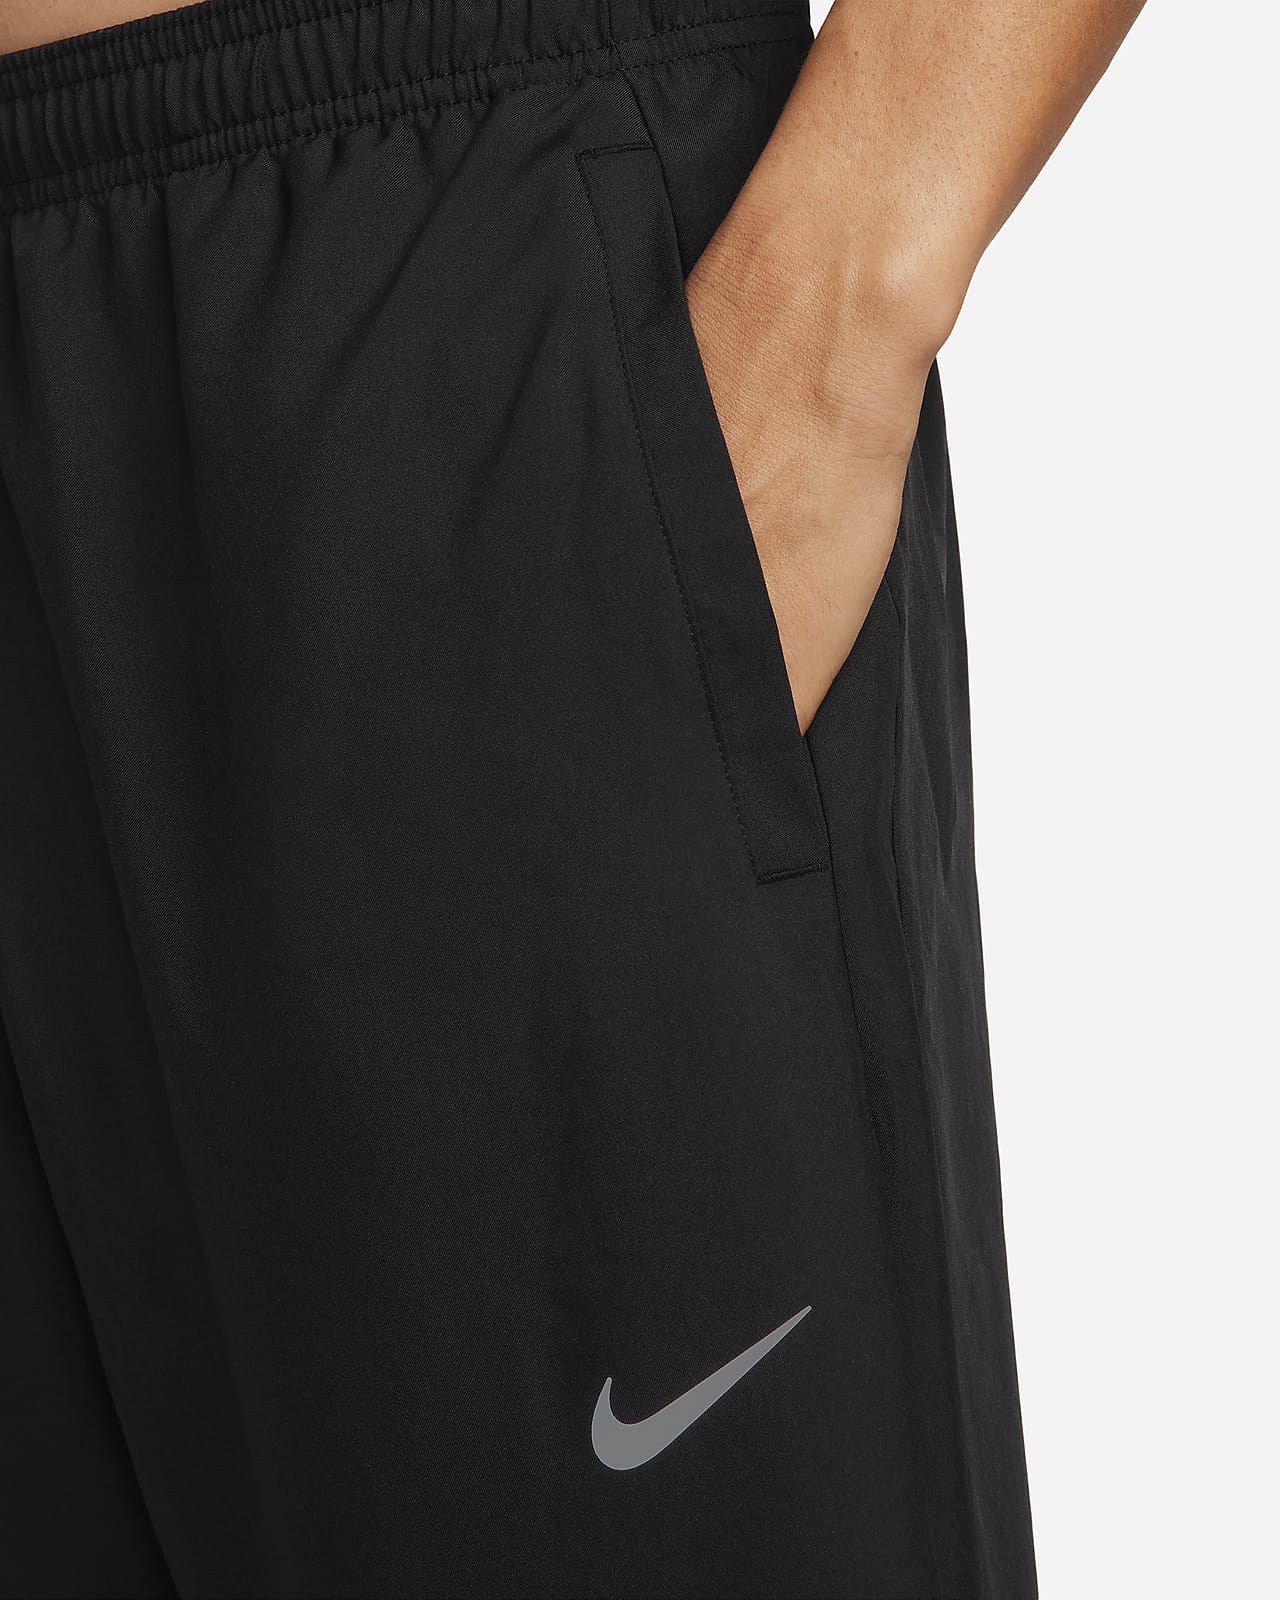 Nike Dri-FIT Challenger Running Pants 'Black' - DX0889-010